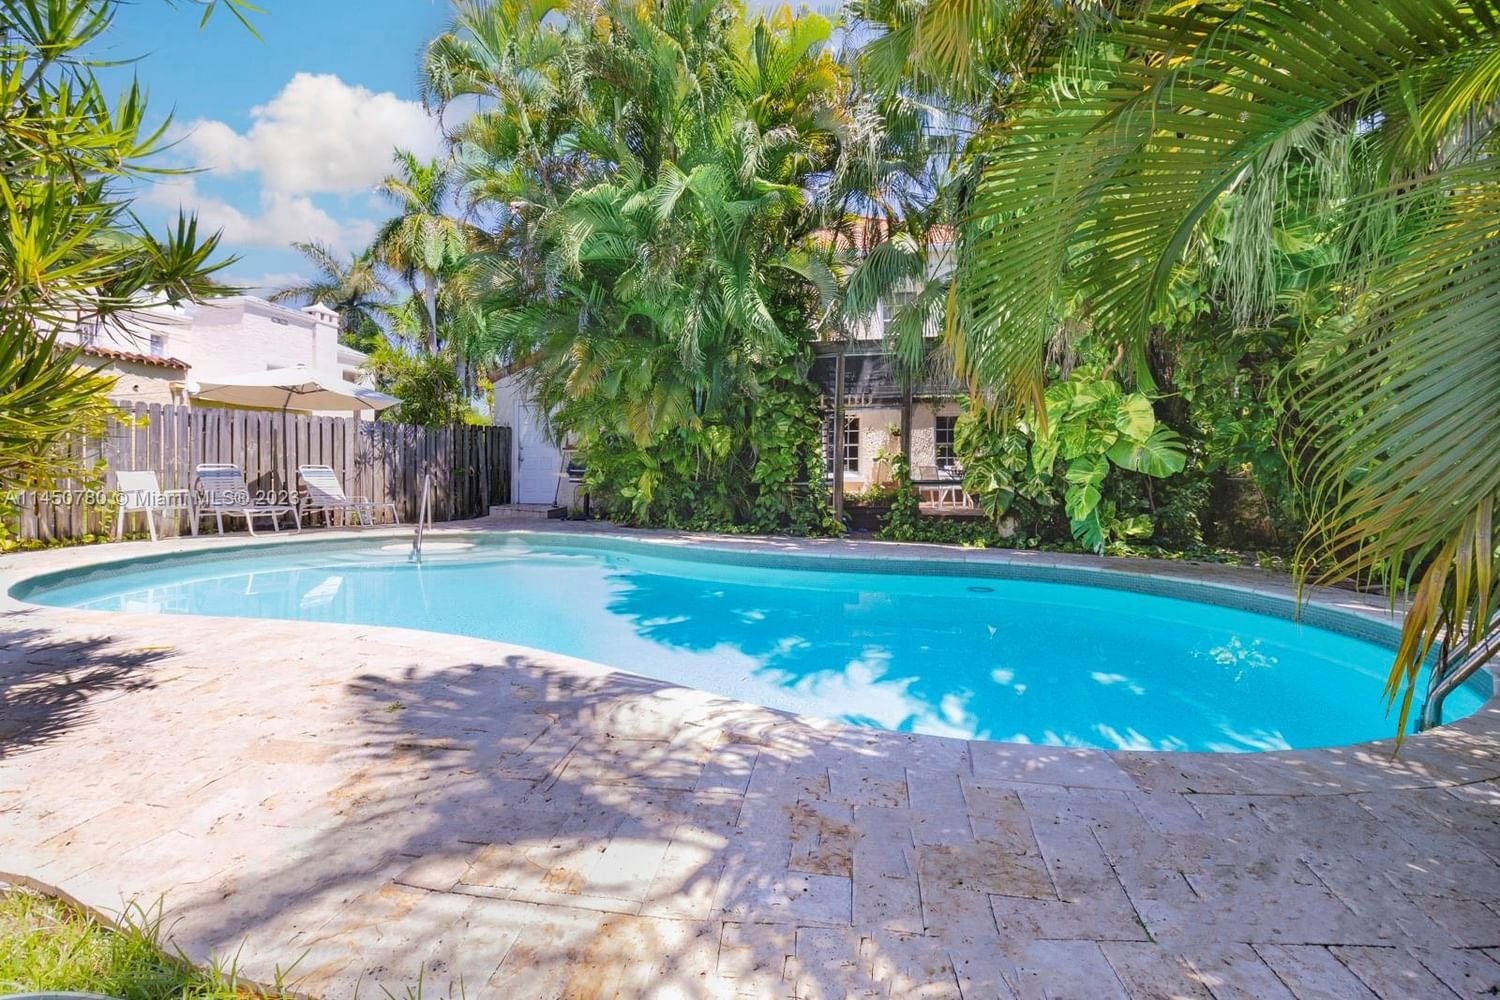 Real estate property located at 2350 Prairie Ave, Miami-Dade County, Miami Beach, FL